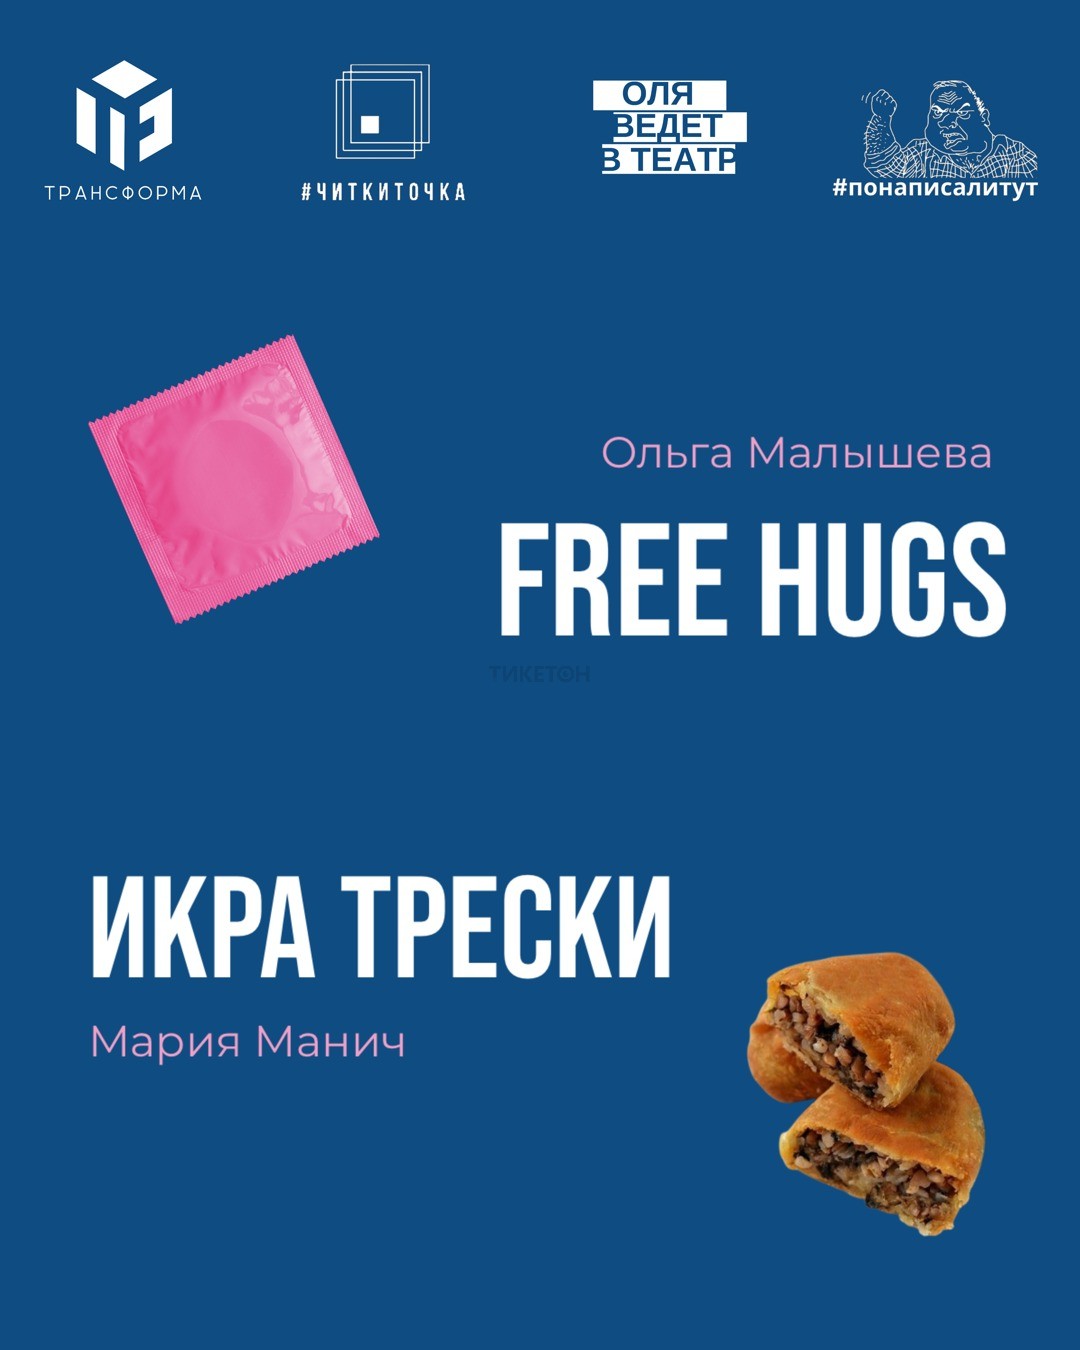 #Chikitochka / FREE HUGS / COD CAVIAR